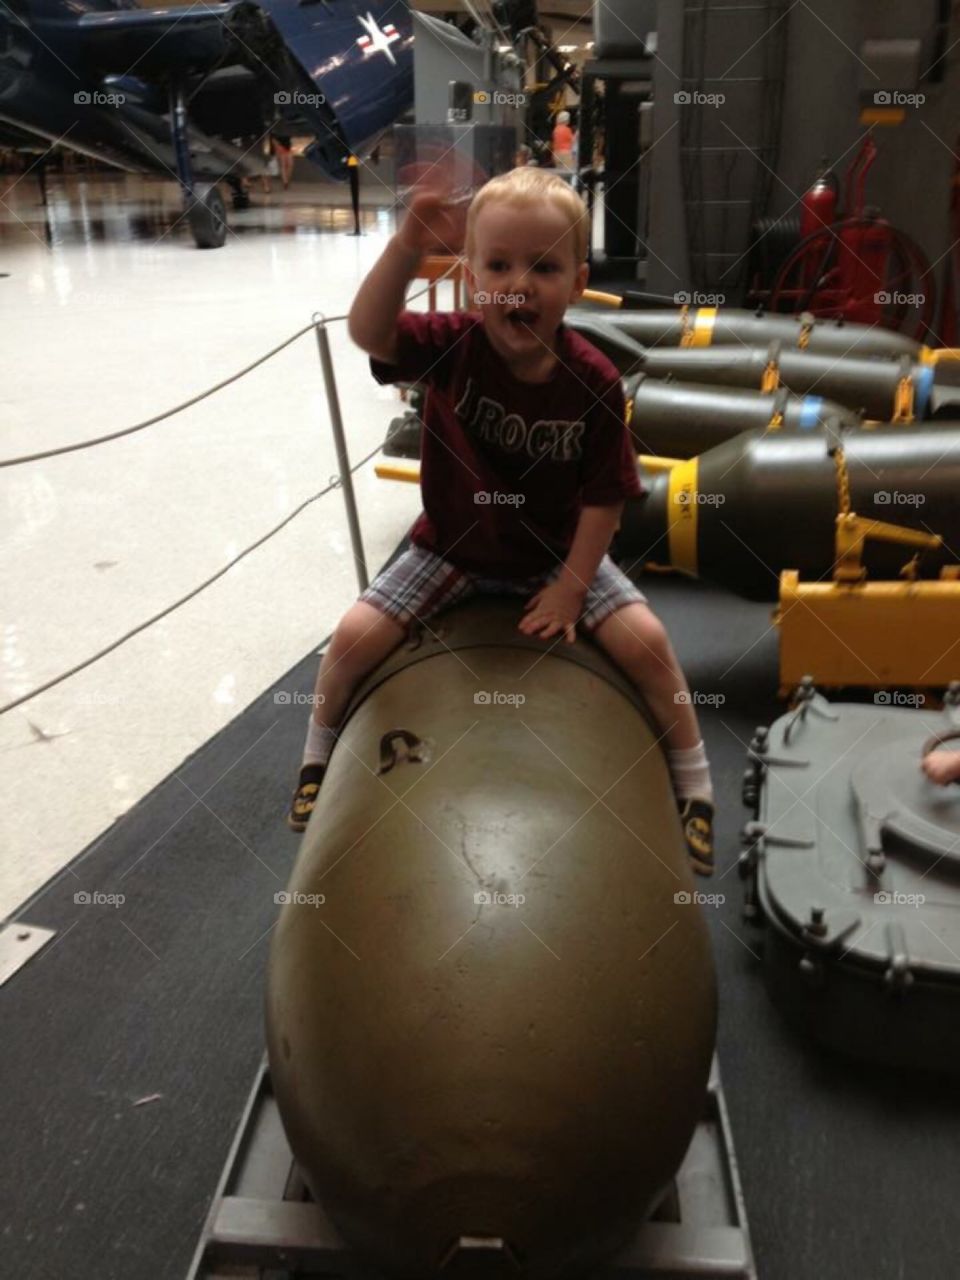 Child riding bomb